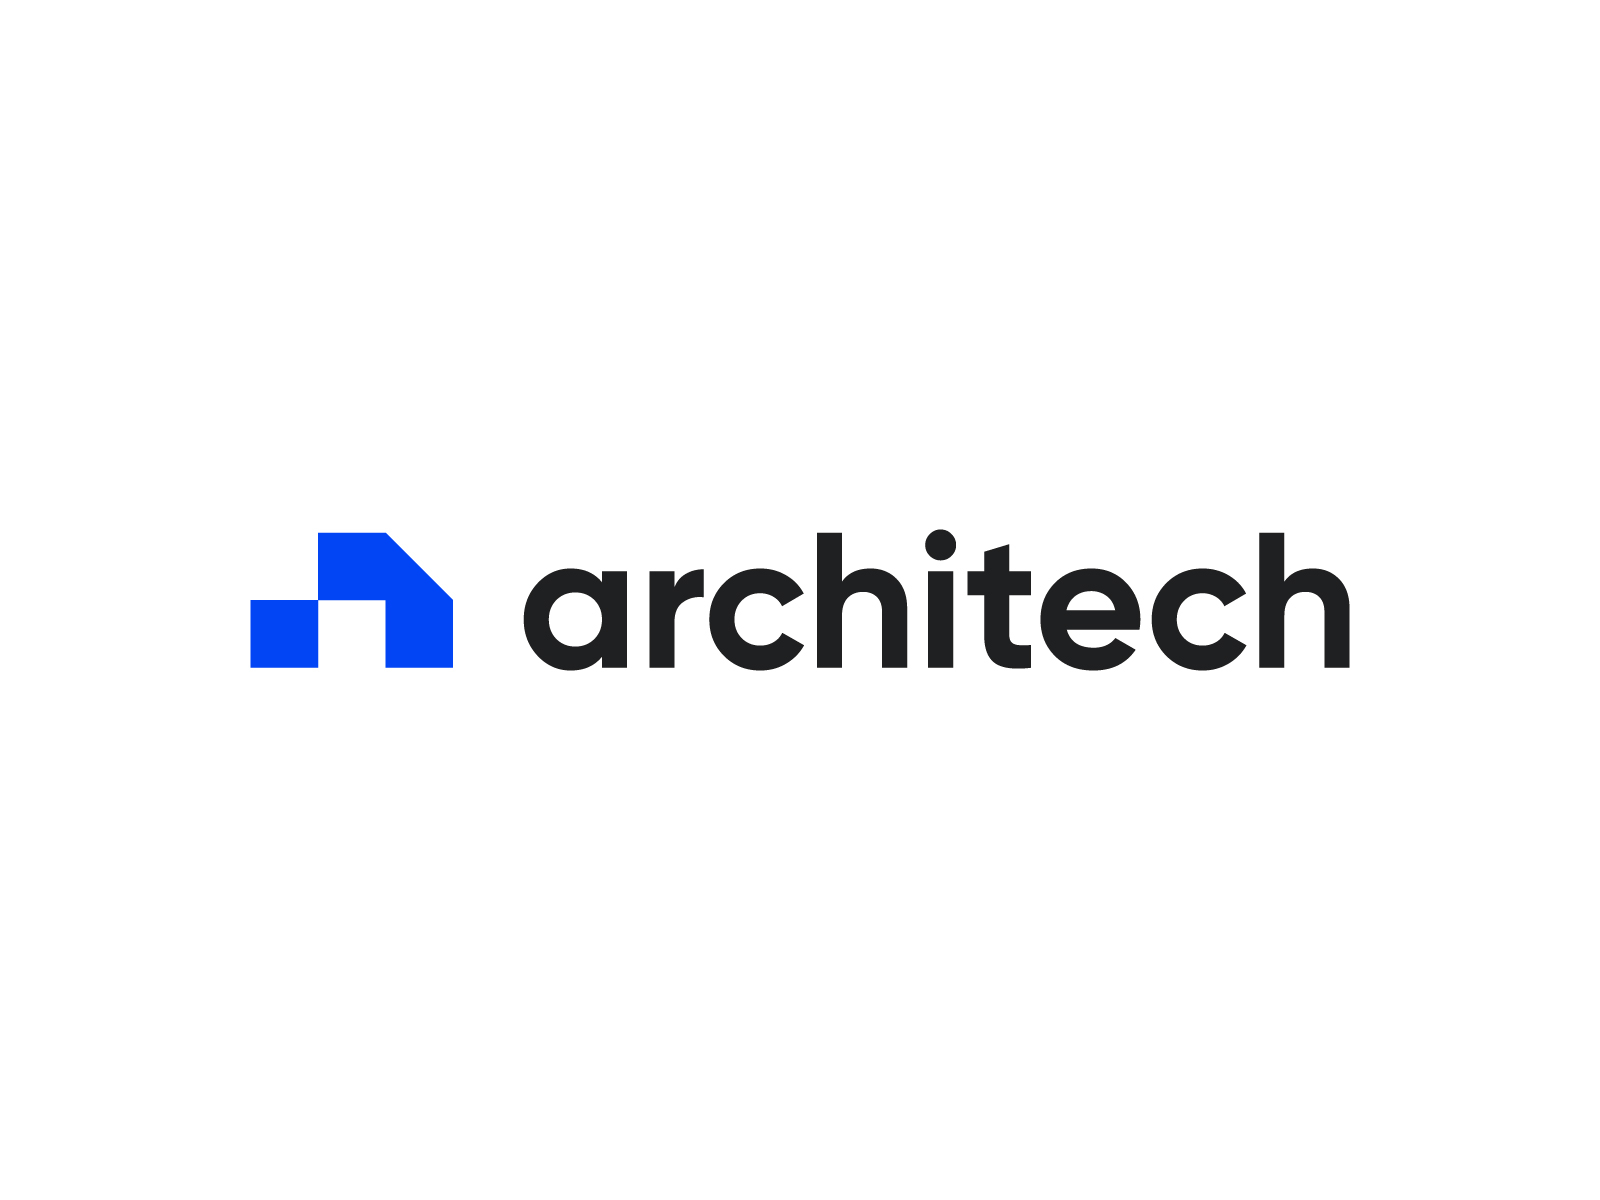 Architech logo design by Batraz Dzida on Dribbble